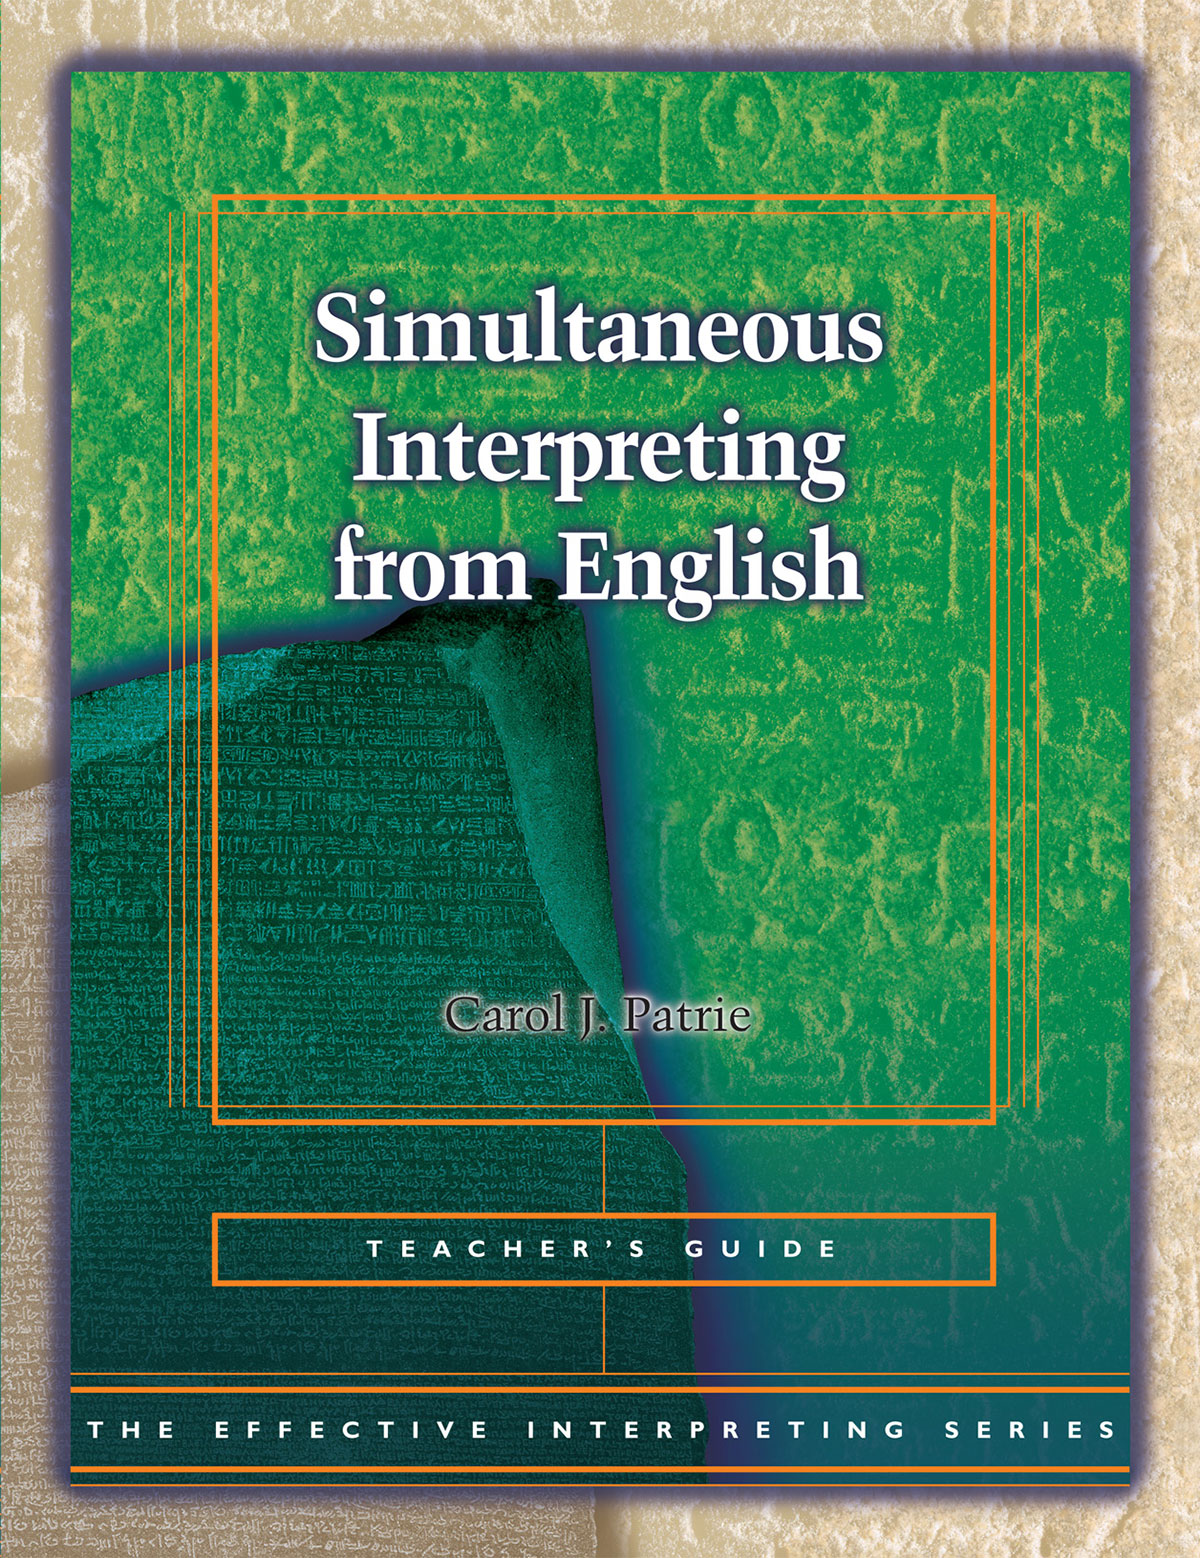 The Effective Interpreting Series: Simultaneous Interpreting from English - Teacher's Set